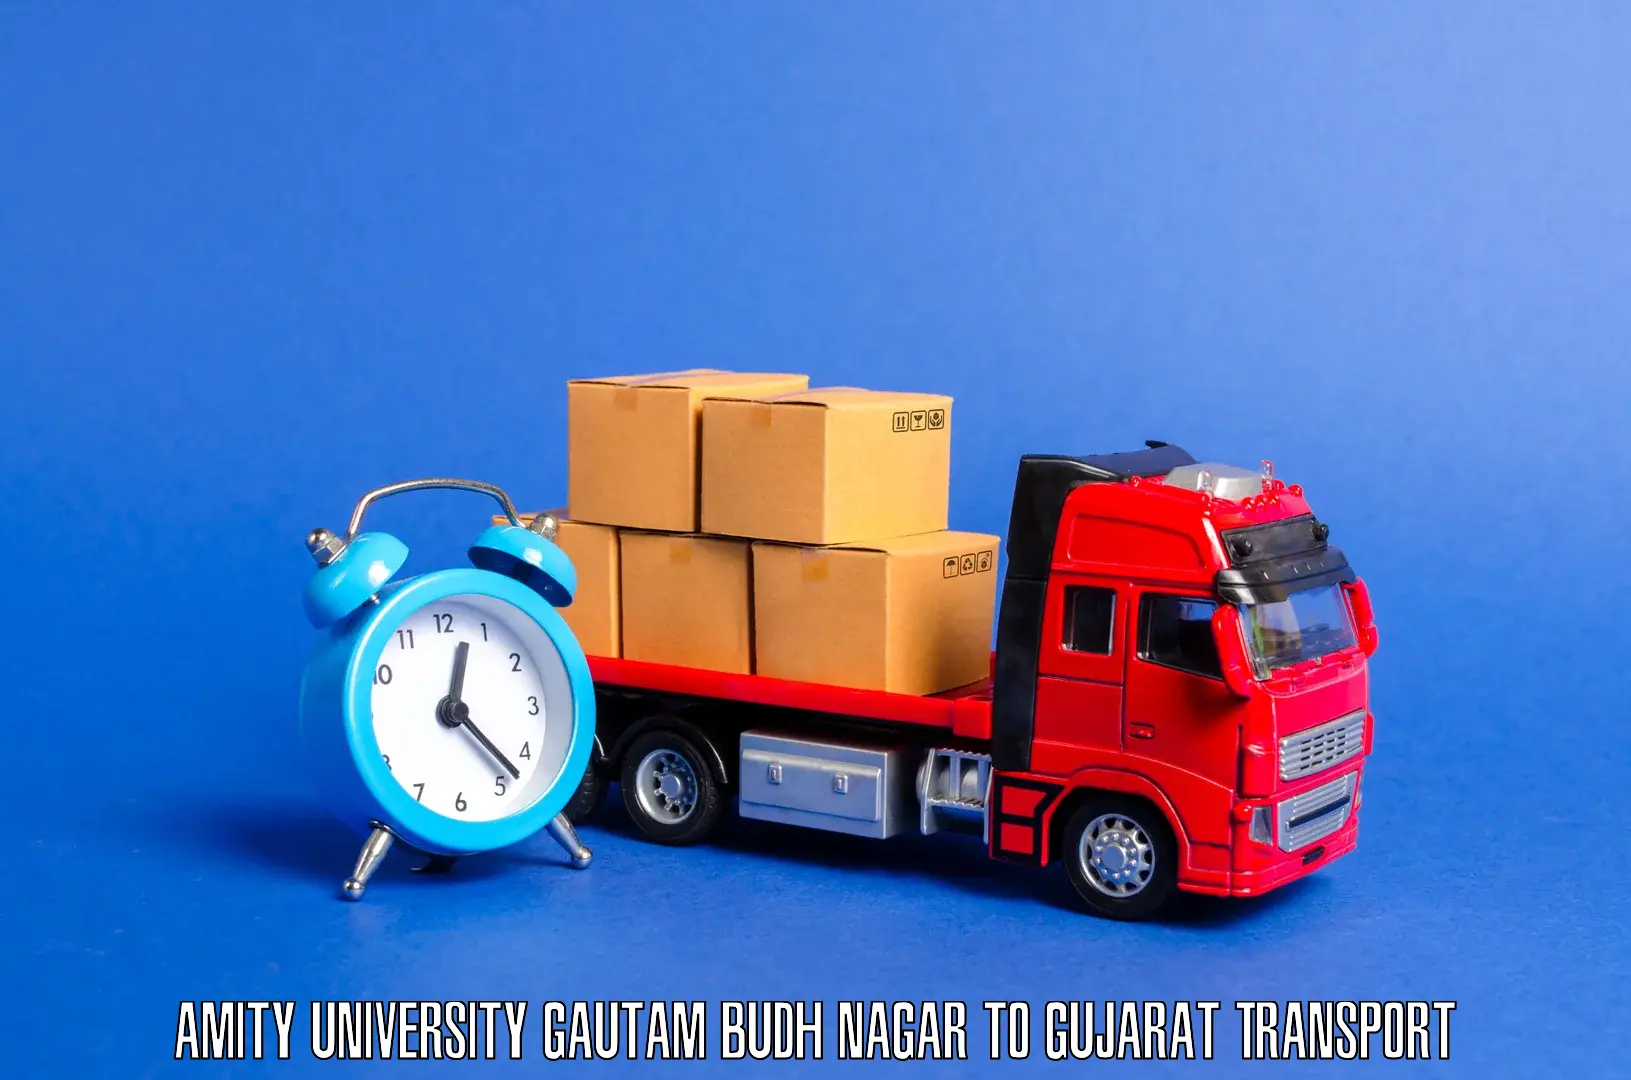 Pick up transport service in Amity University Gautam Budh Nagar to Morbi